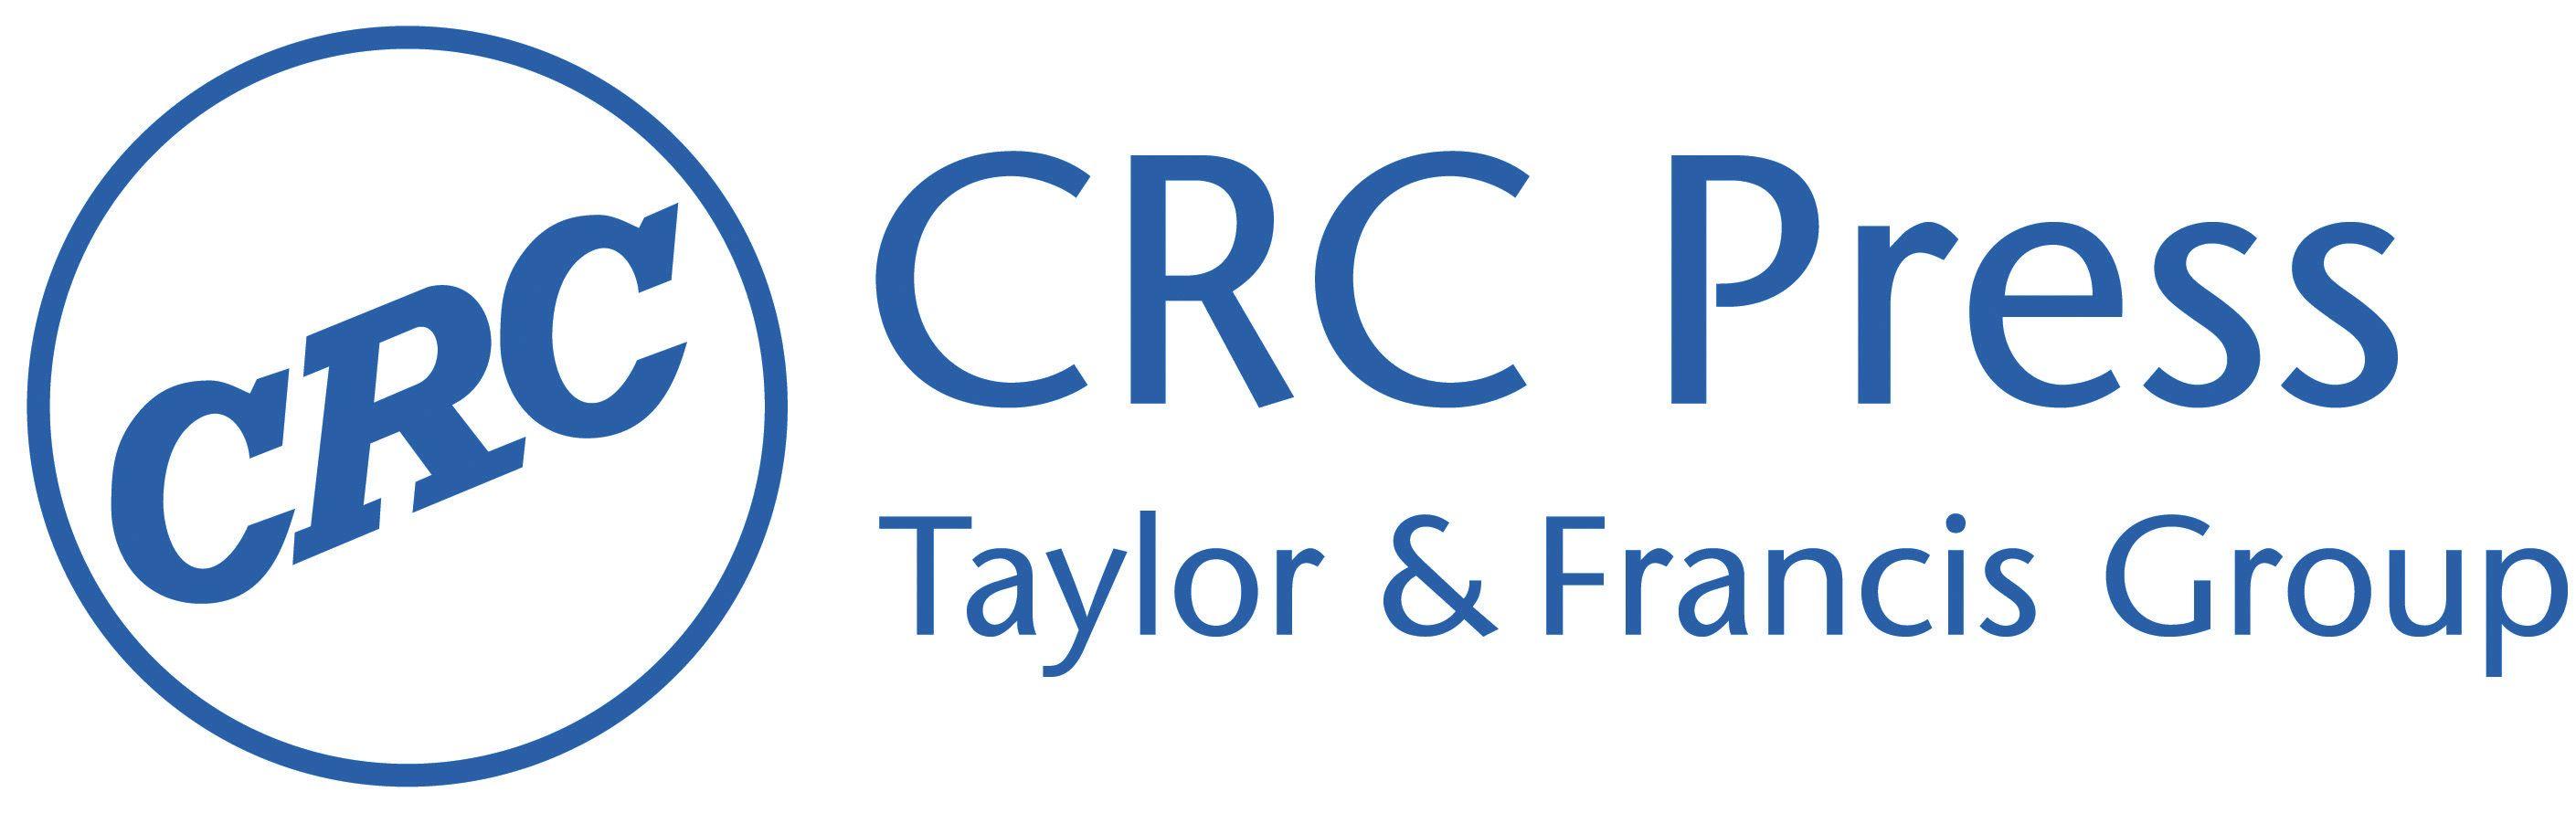 CRC Logo - Crc Press Logo